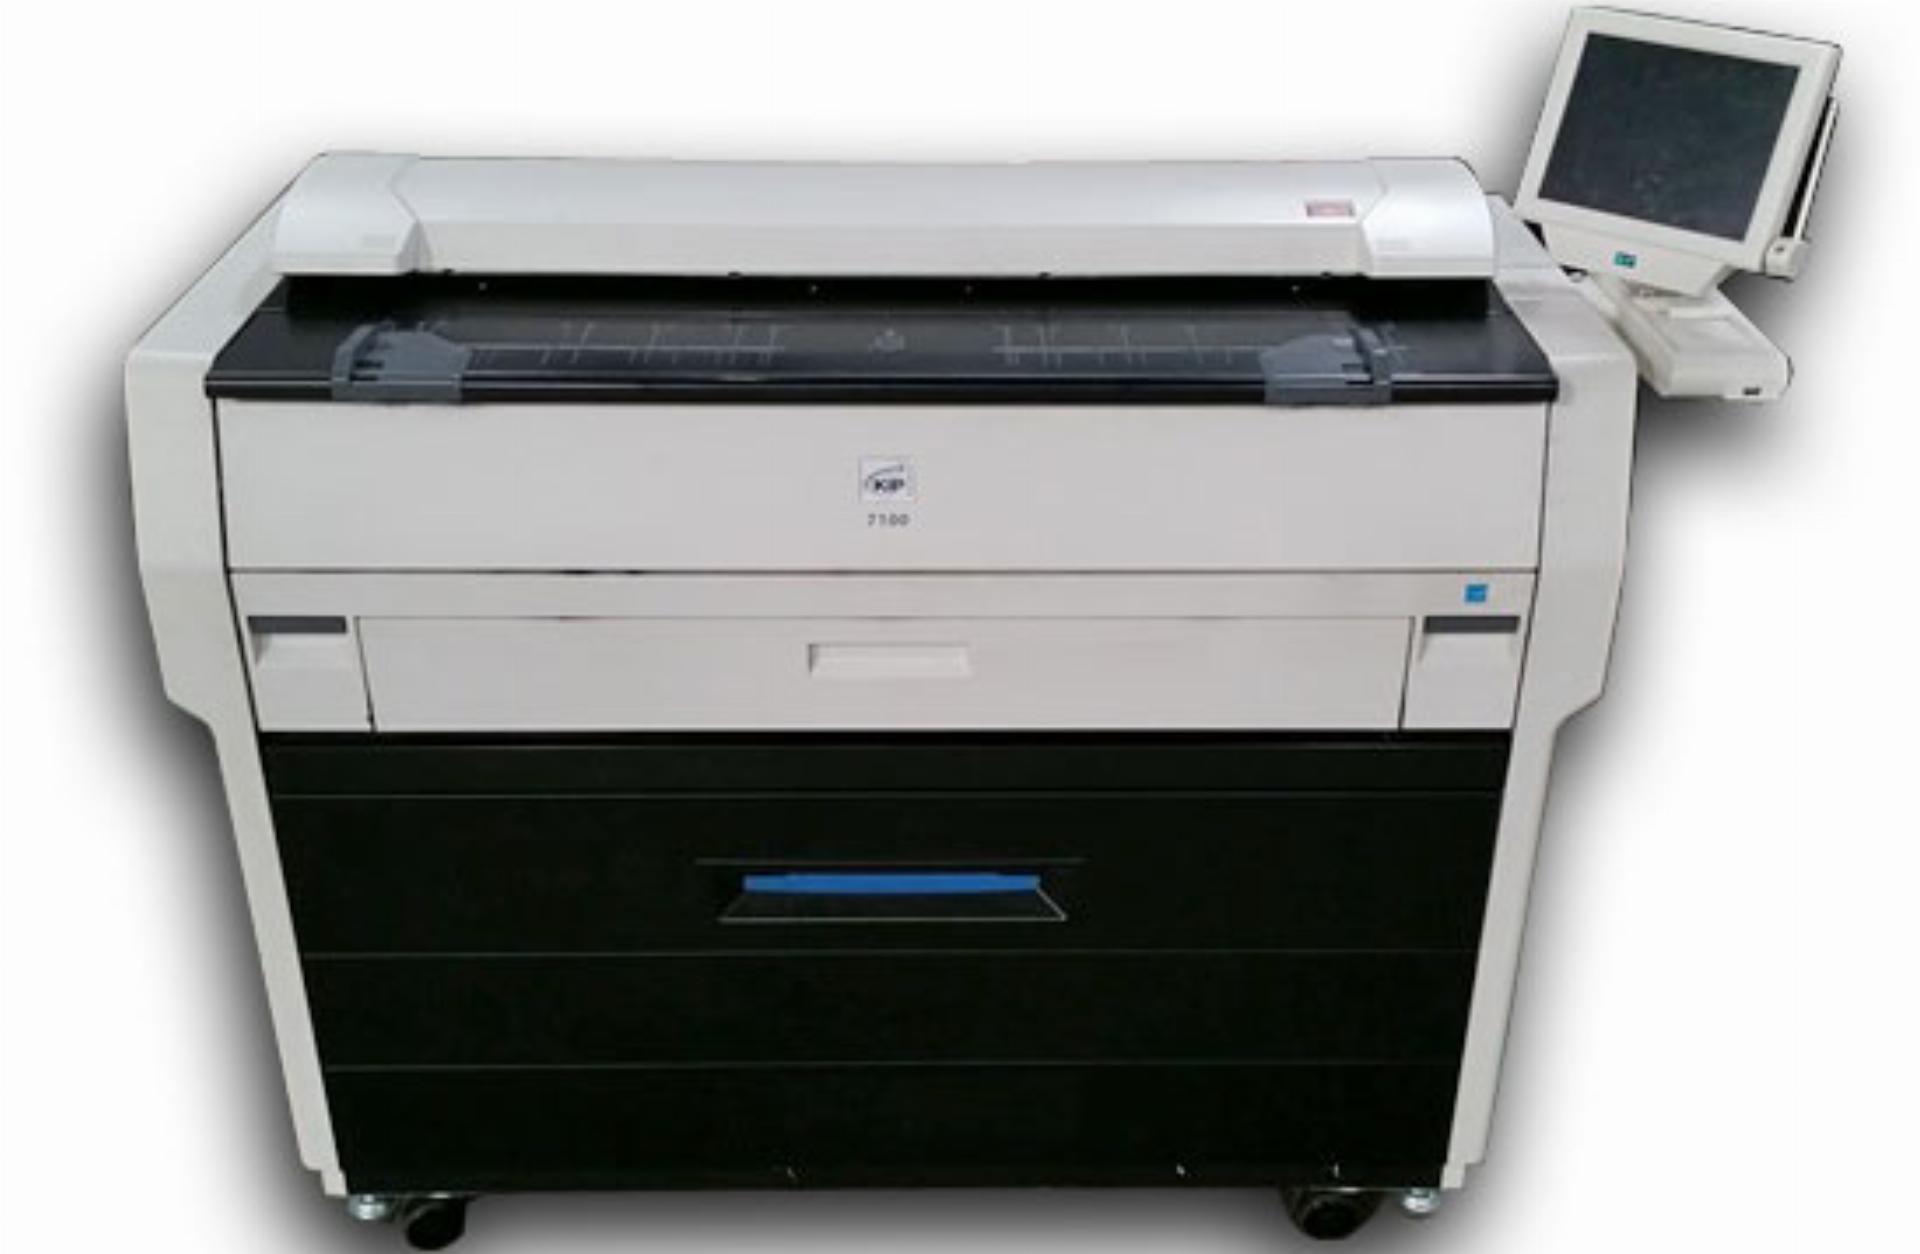 Equipment General Goods Equipment Kip 7100 Colour Scan PDF Copier